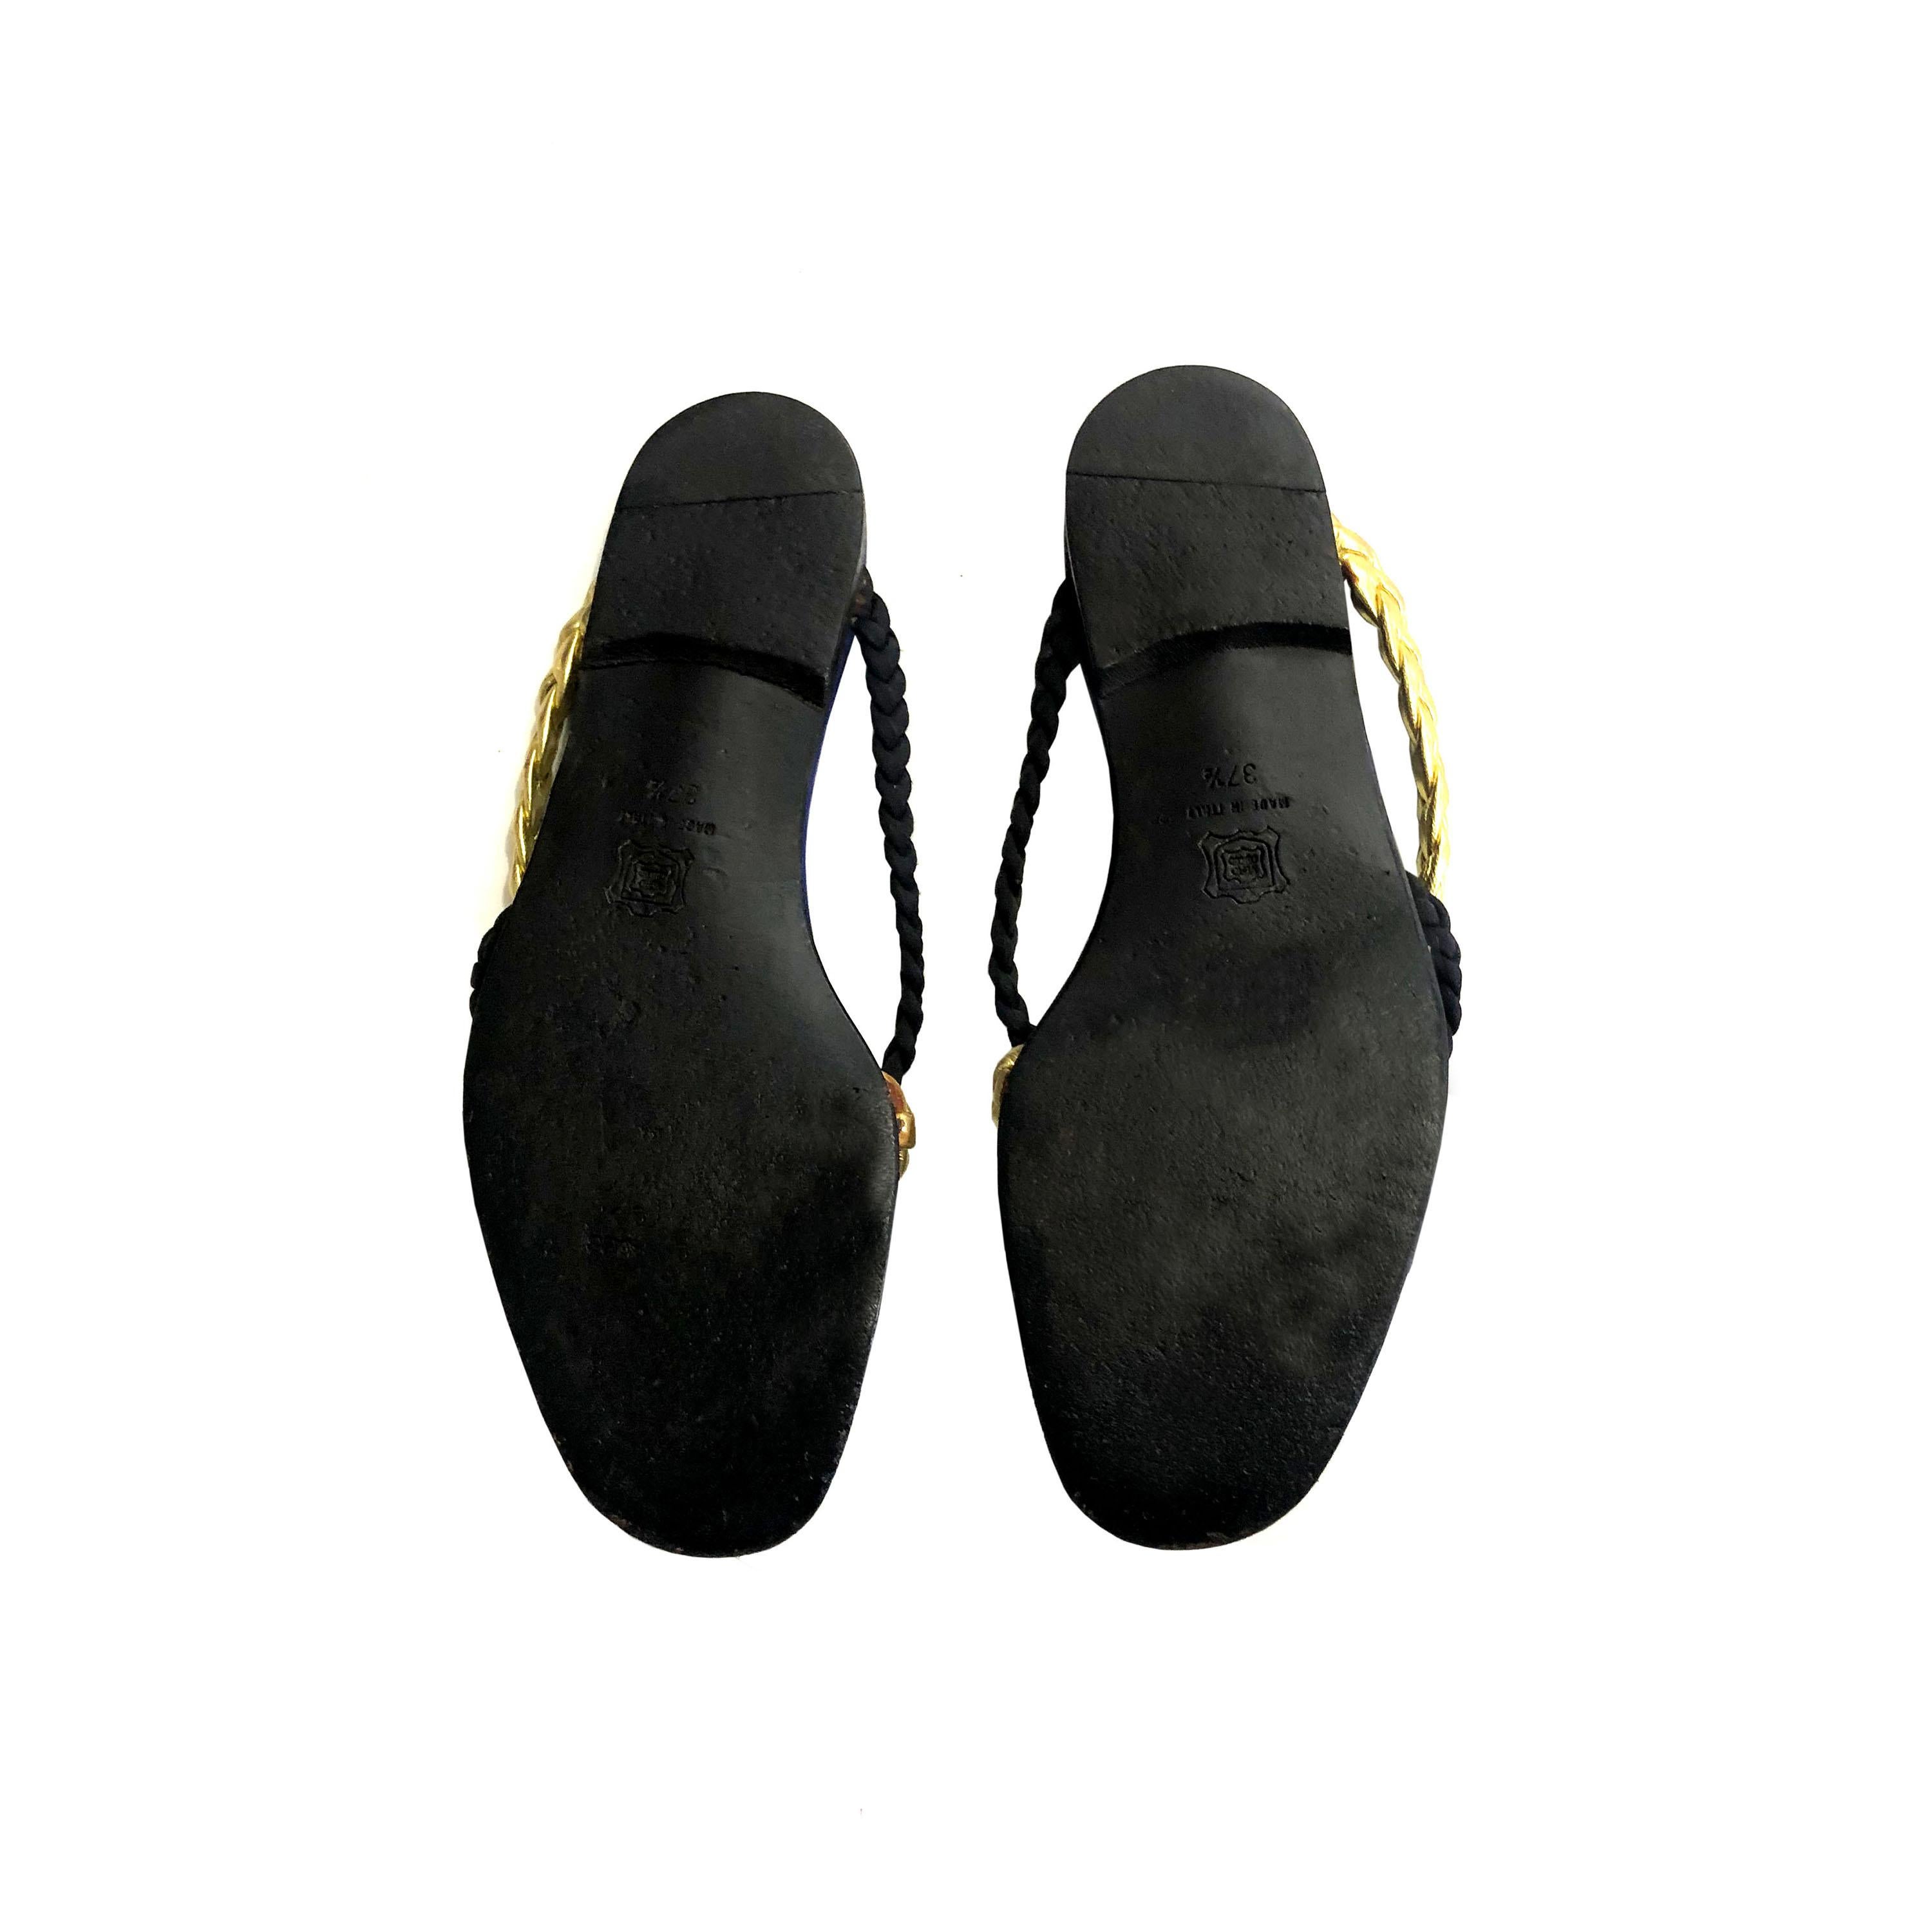 Gianni Versace Sandals - 1980s Vintage - Gold Leather Plaited Straps - EU 37.5 For Sale 2